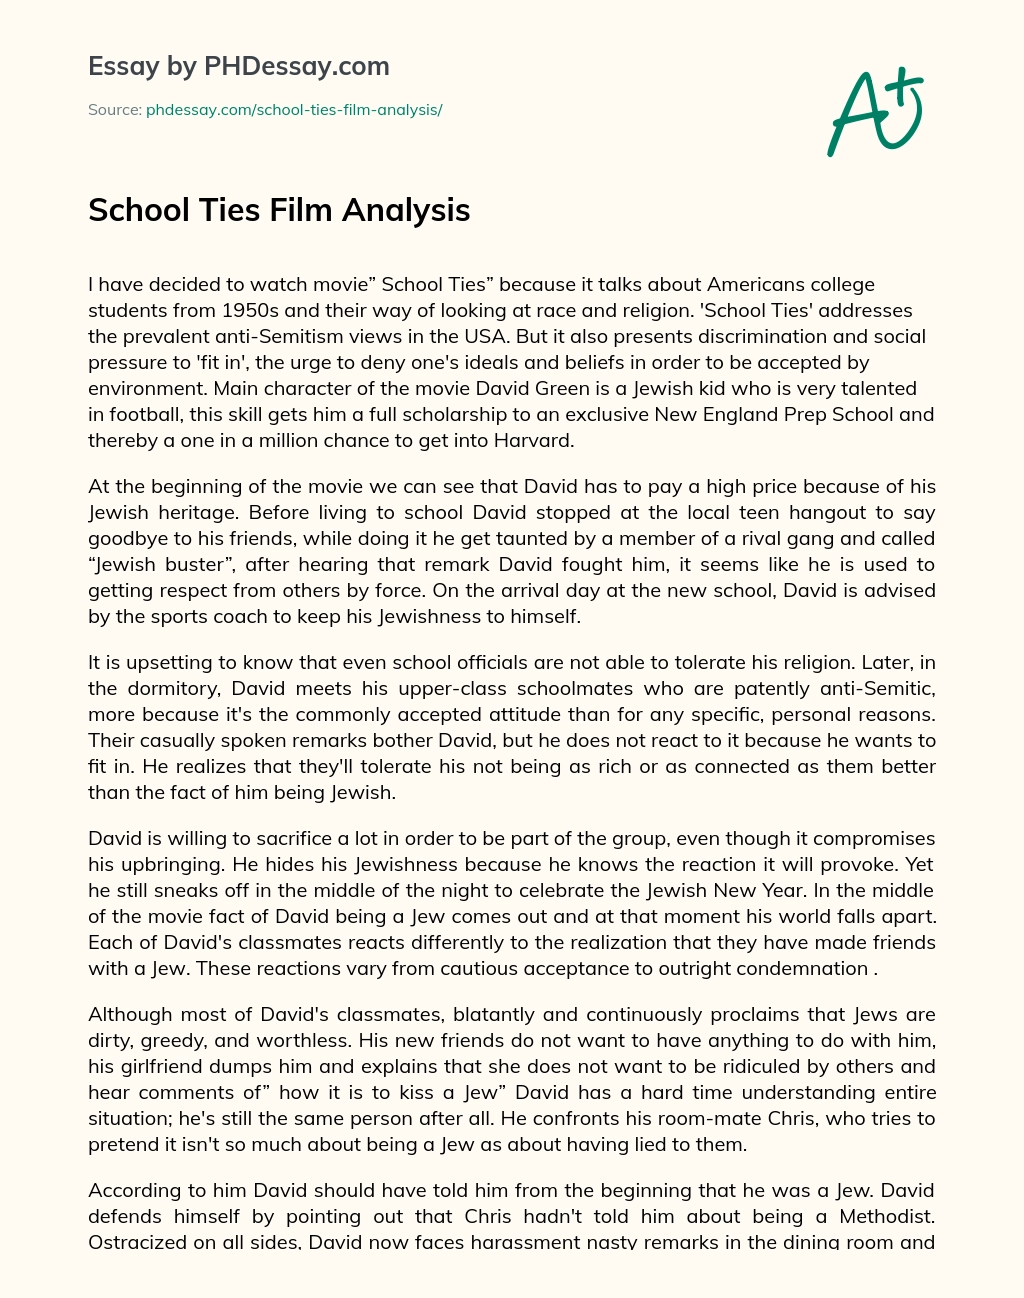 School Ties Film Analysis essay